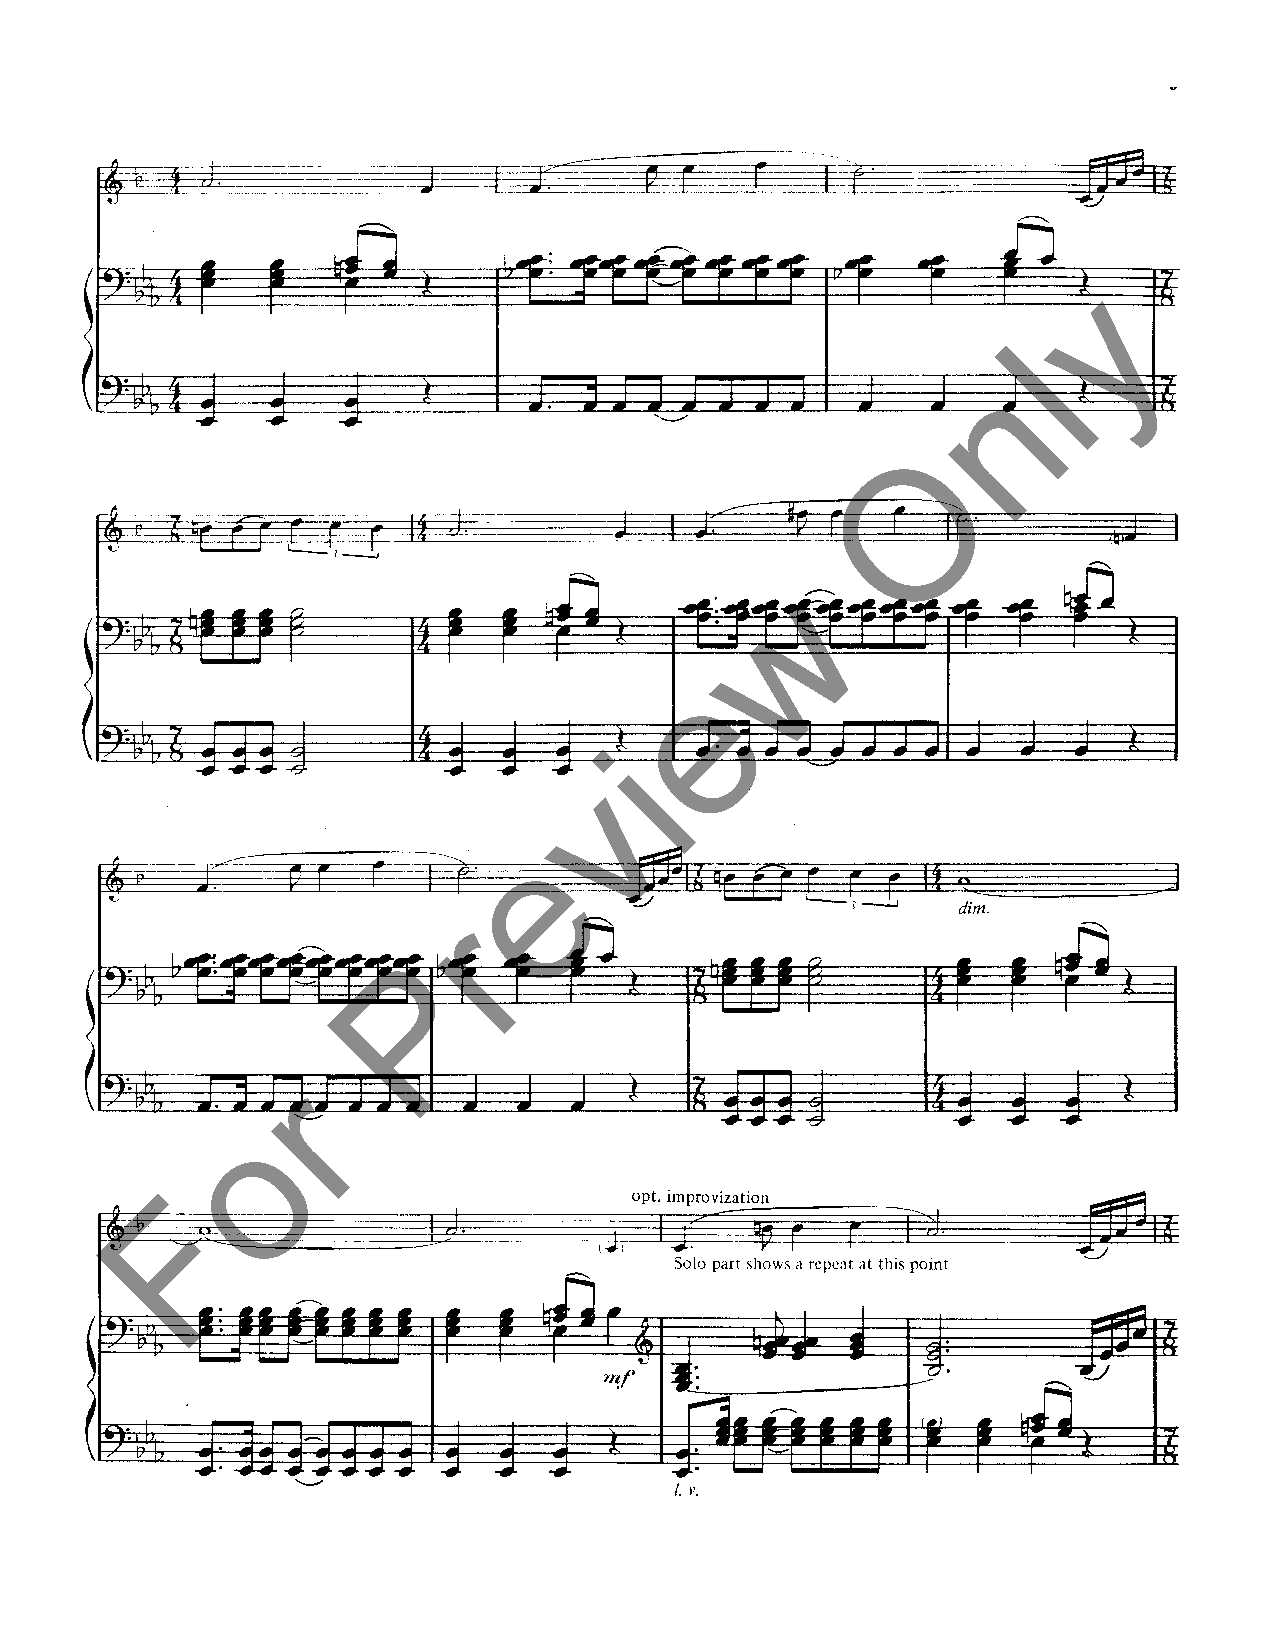 Fantasy for Trumpet Solo with Piano